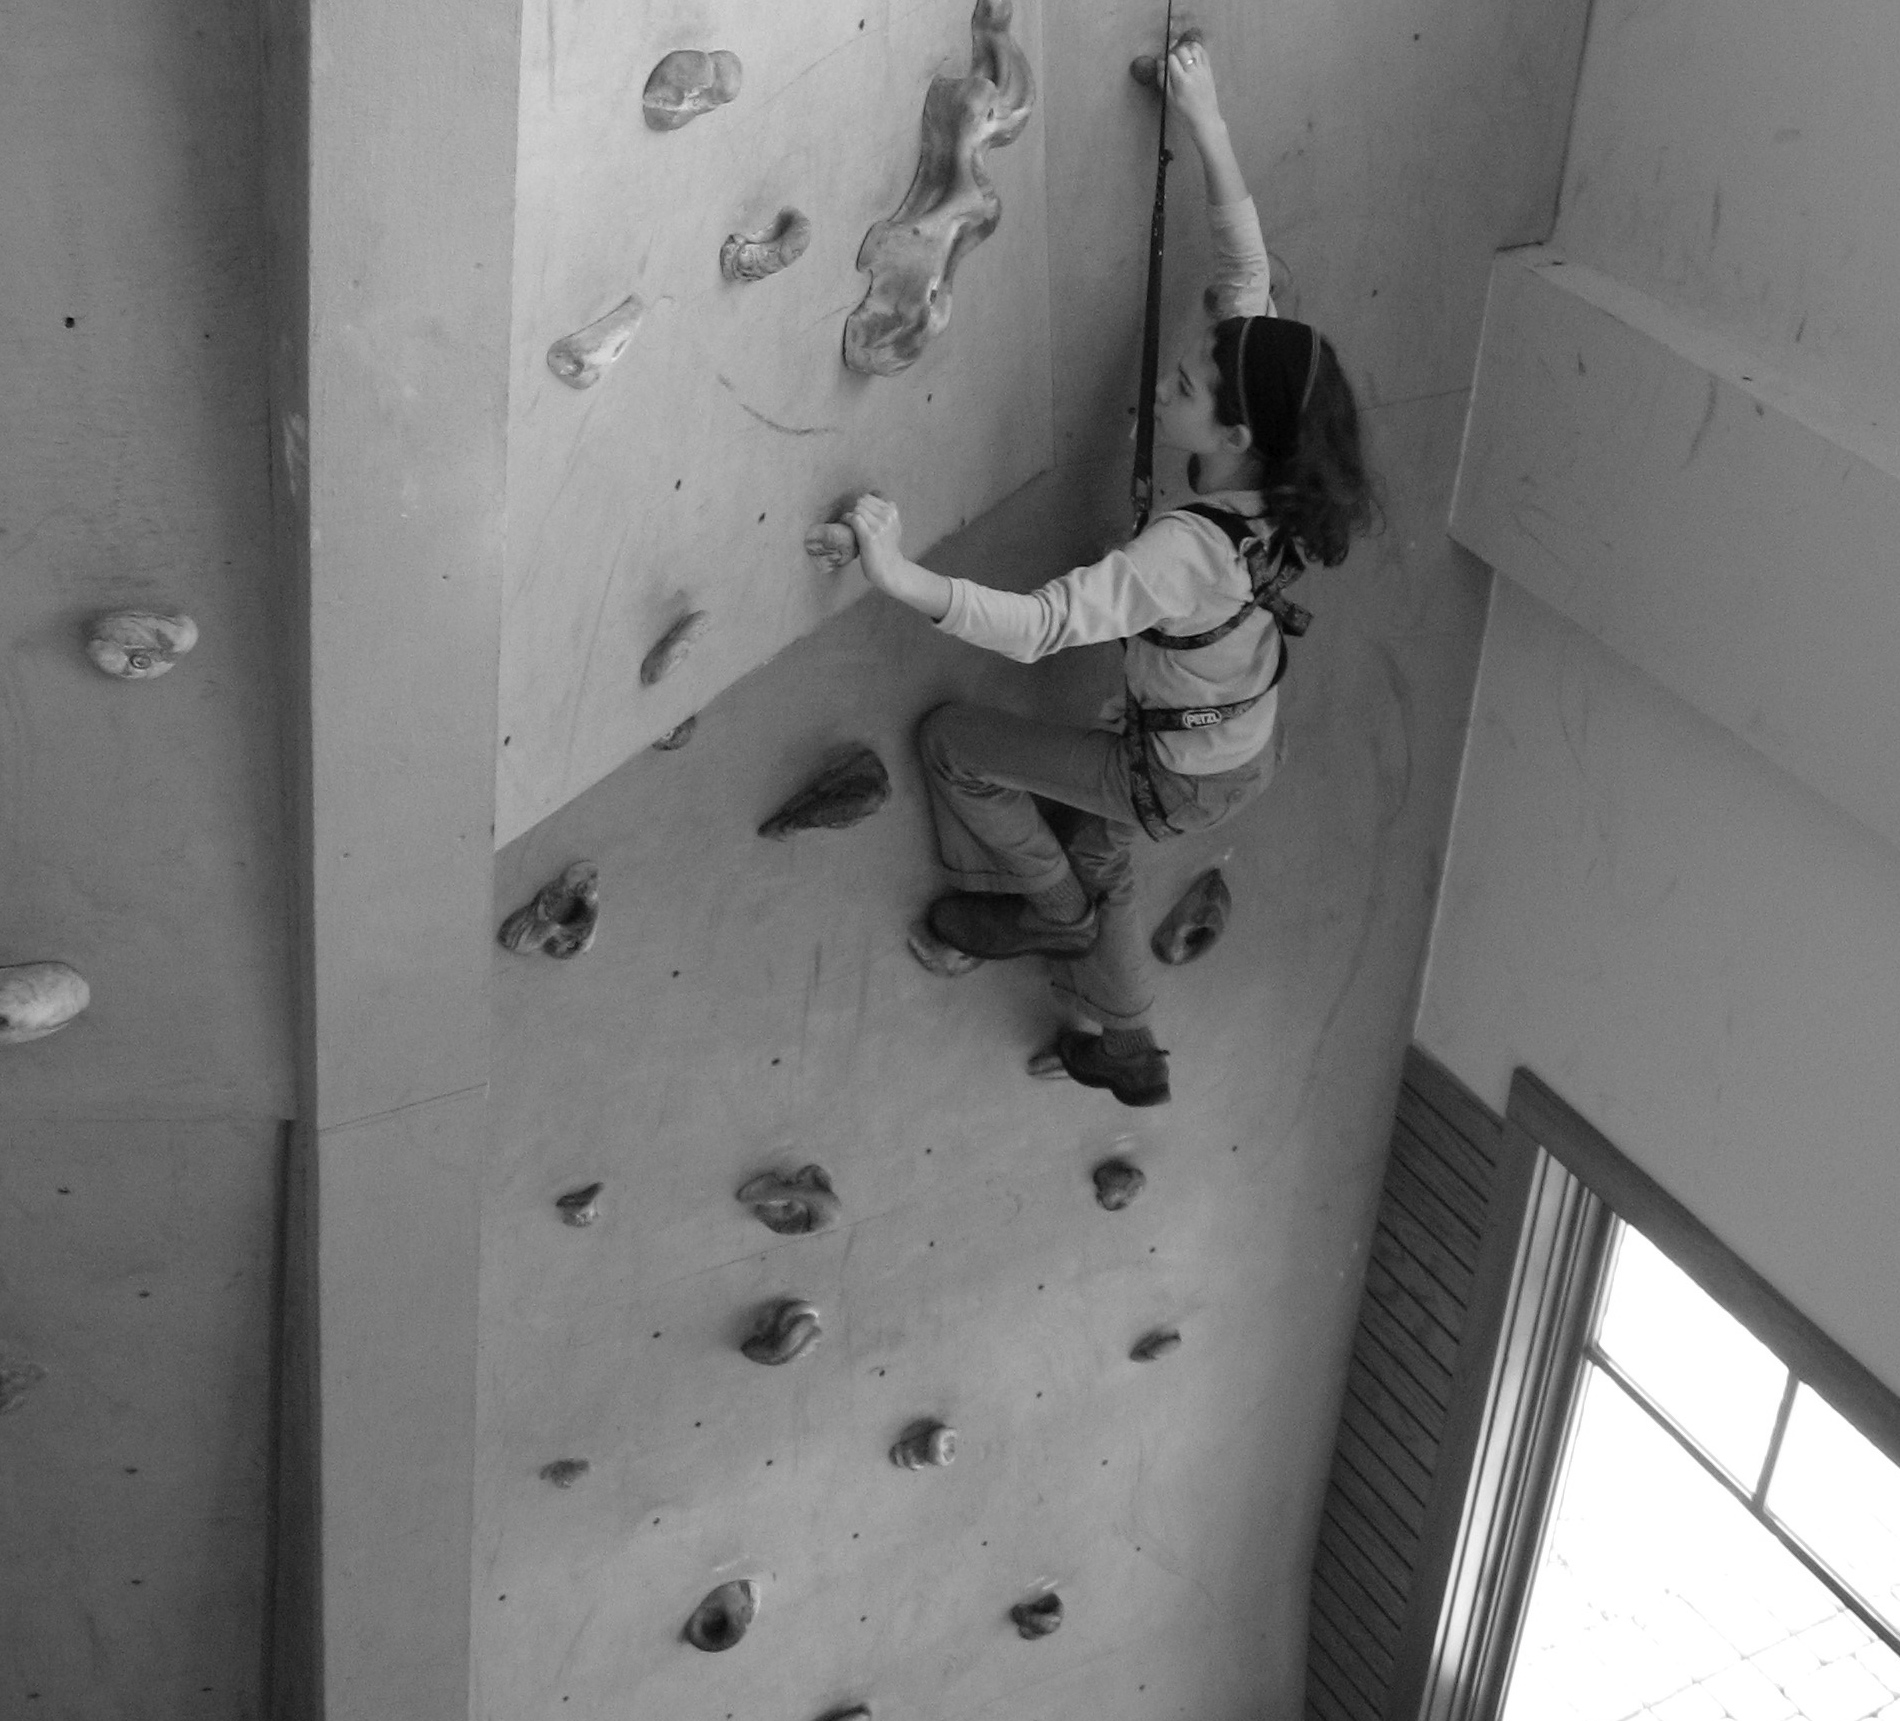 JCJ:climbing wall